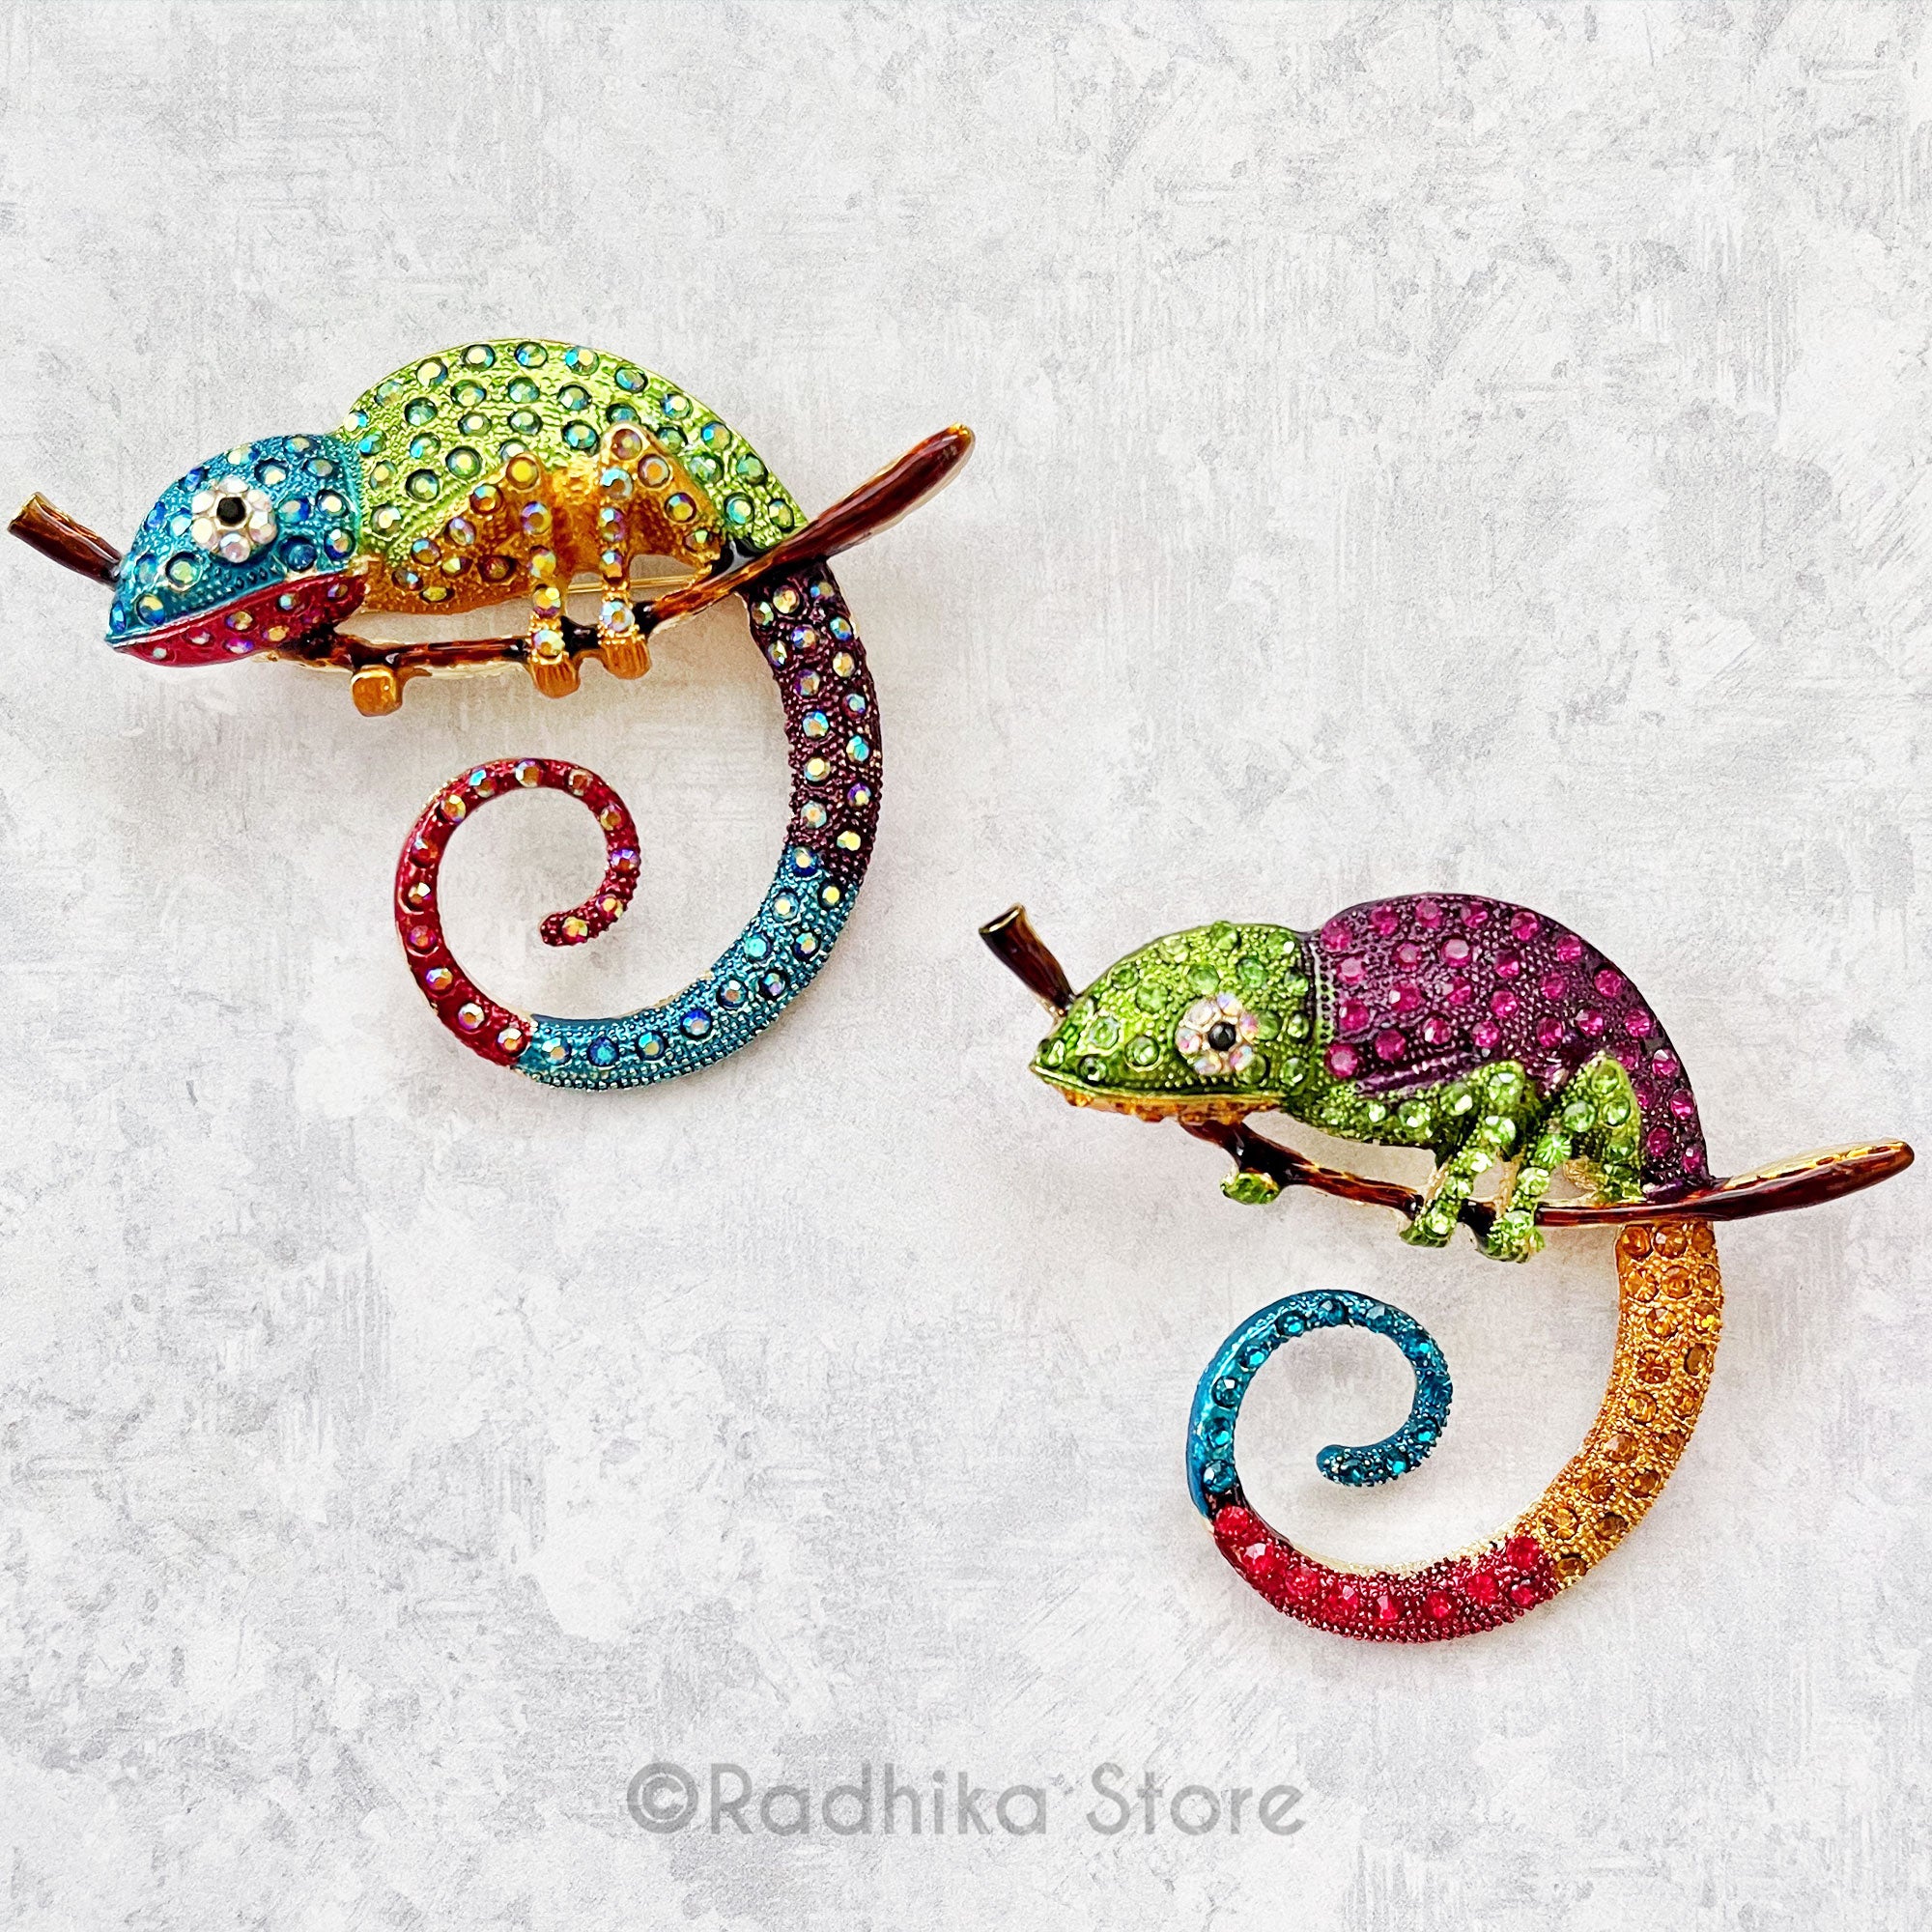 Chameleon-Pendant-(Pin)- Choose Color